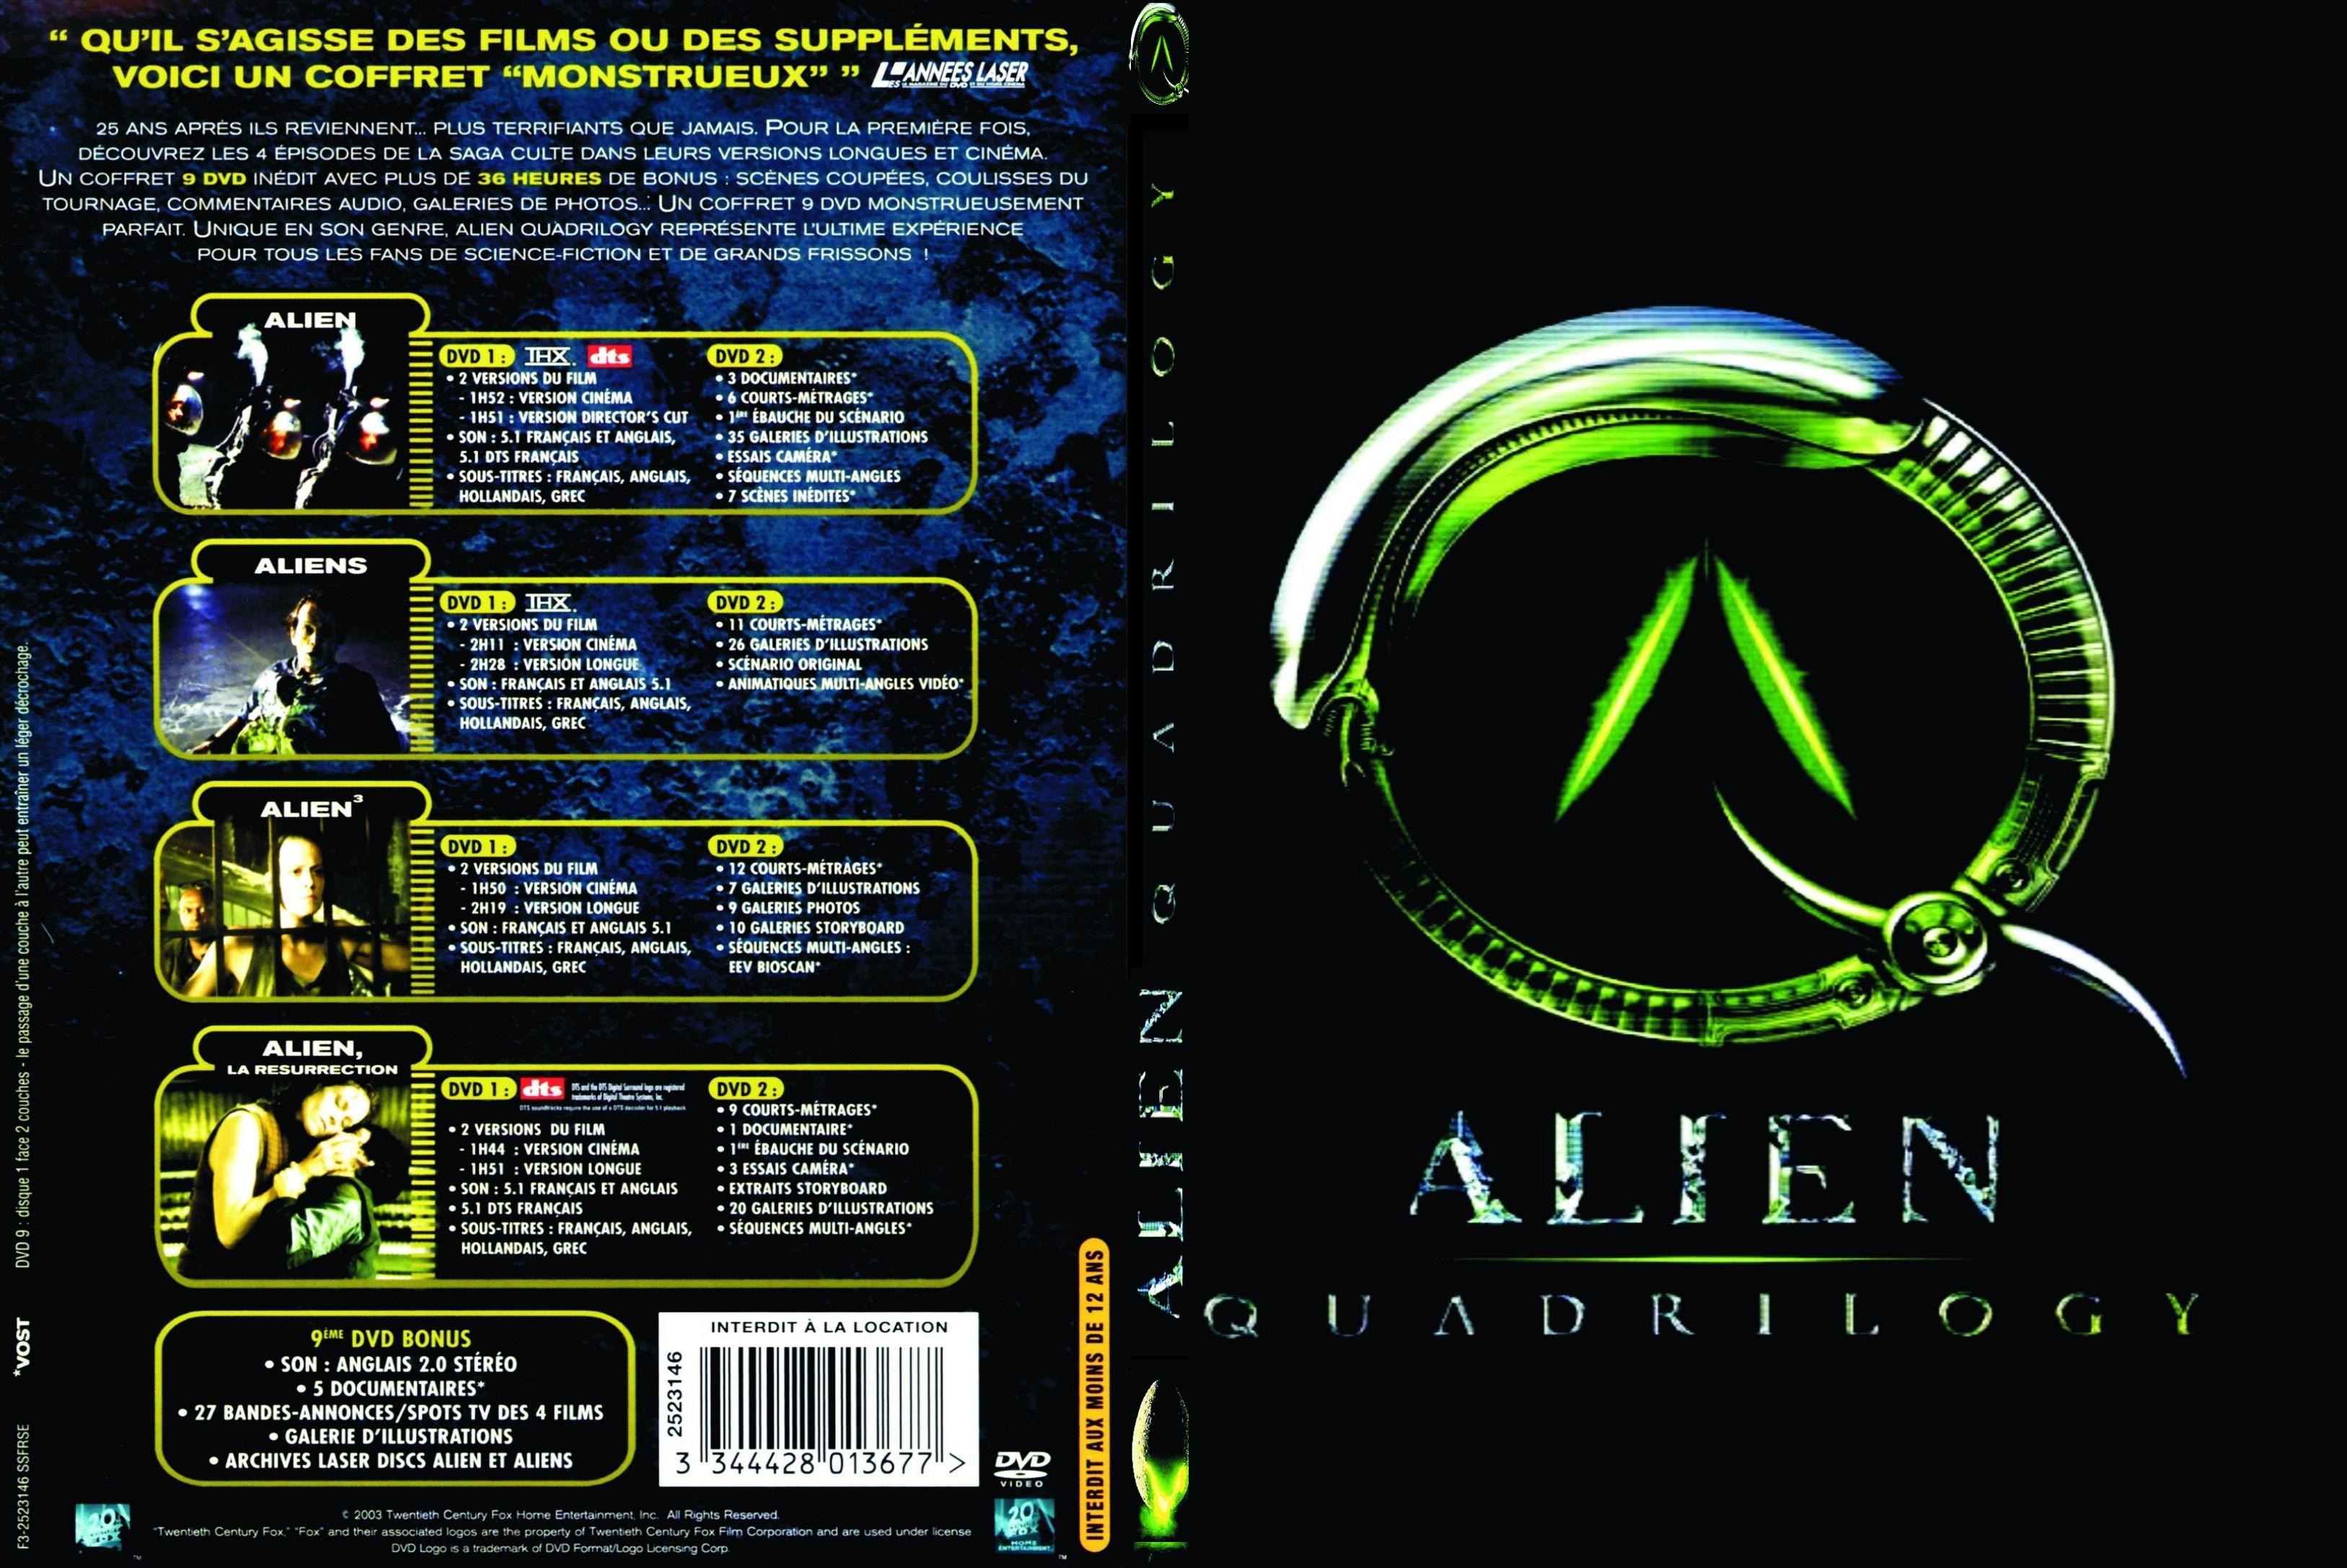 Jaquette DVD Alien quadrilogy - SLIM